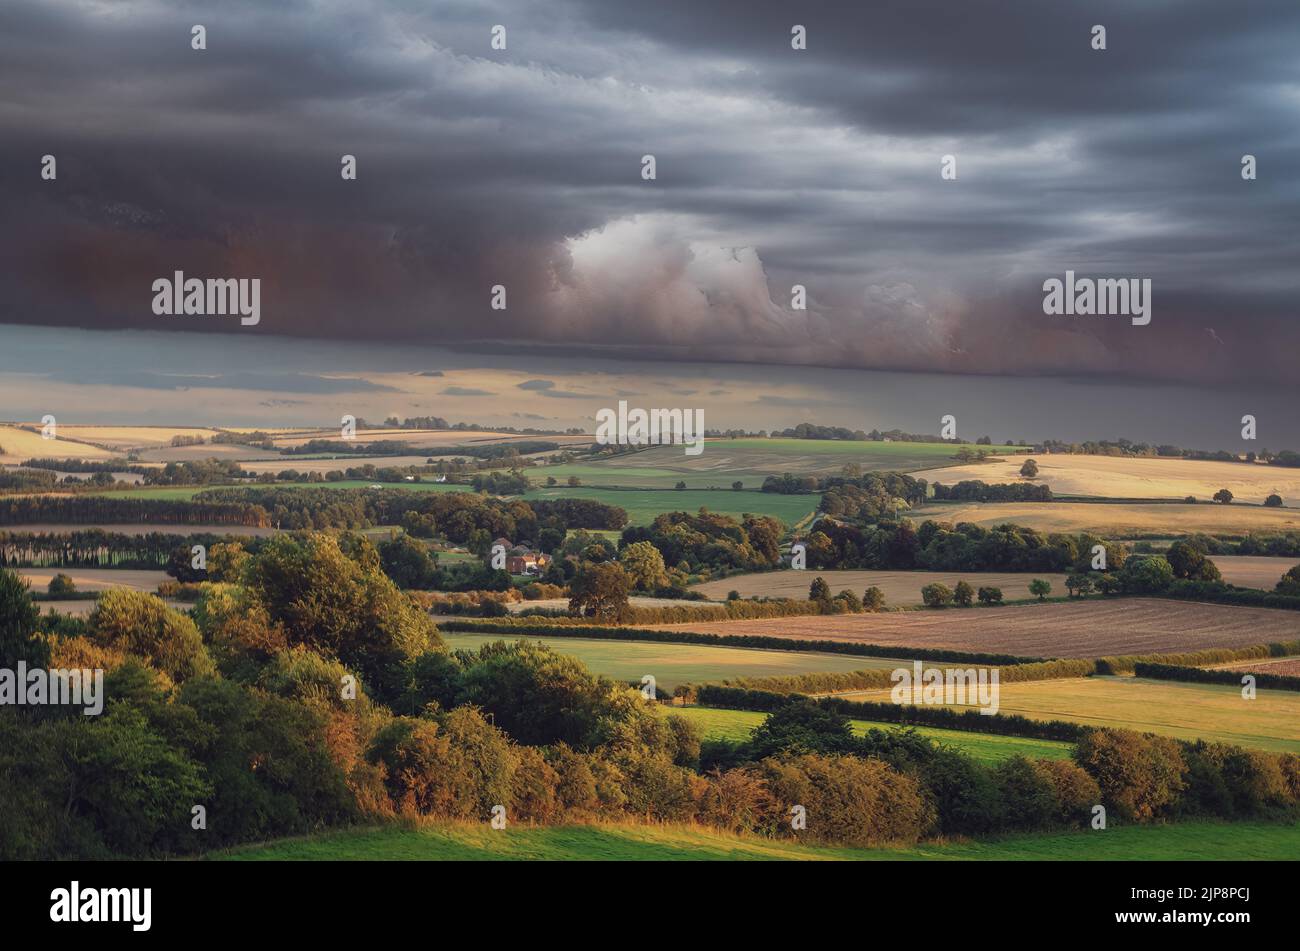 Storm front over summer evening landscape Stock Photo